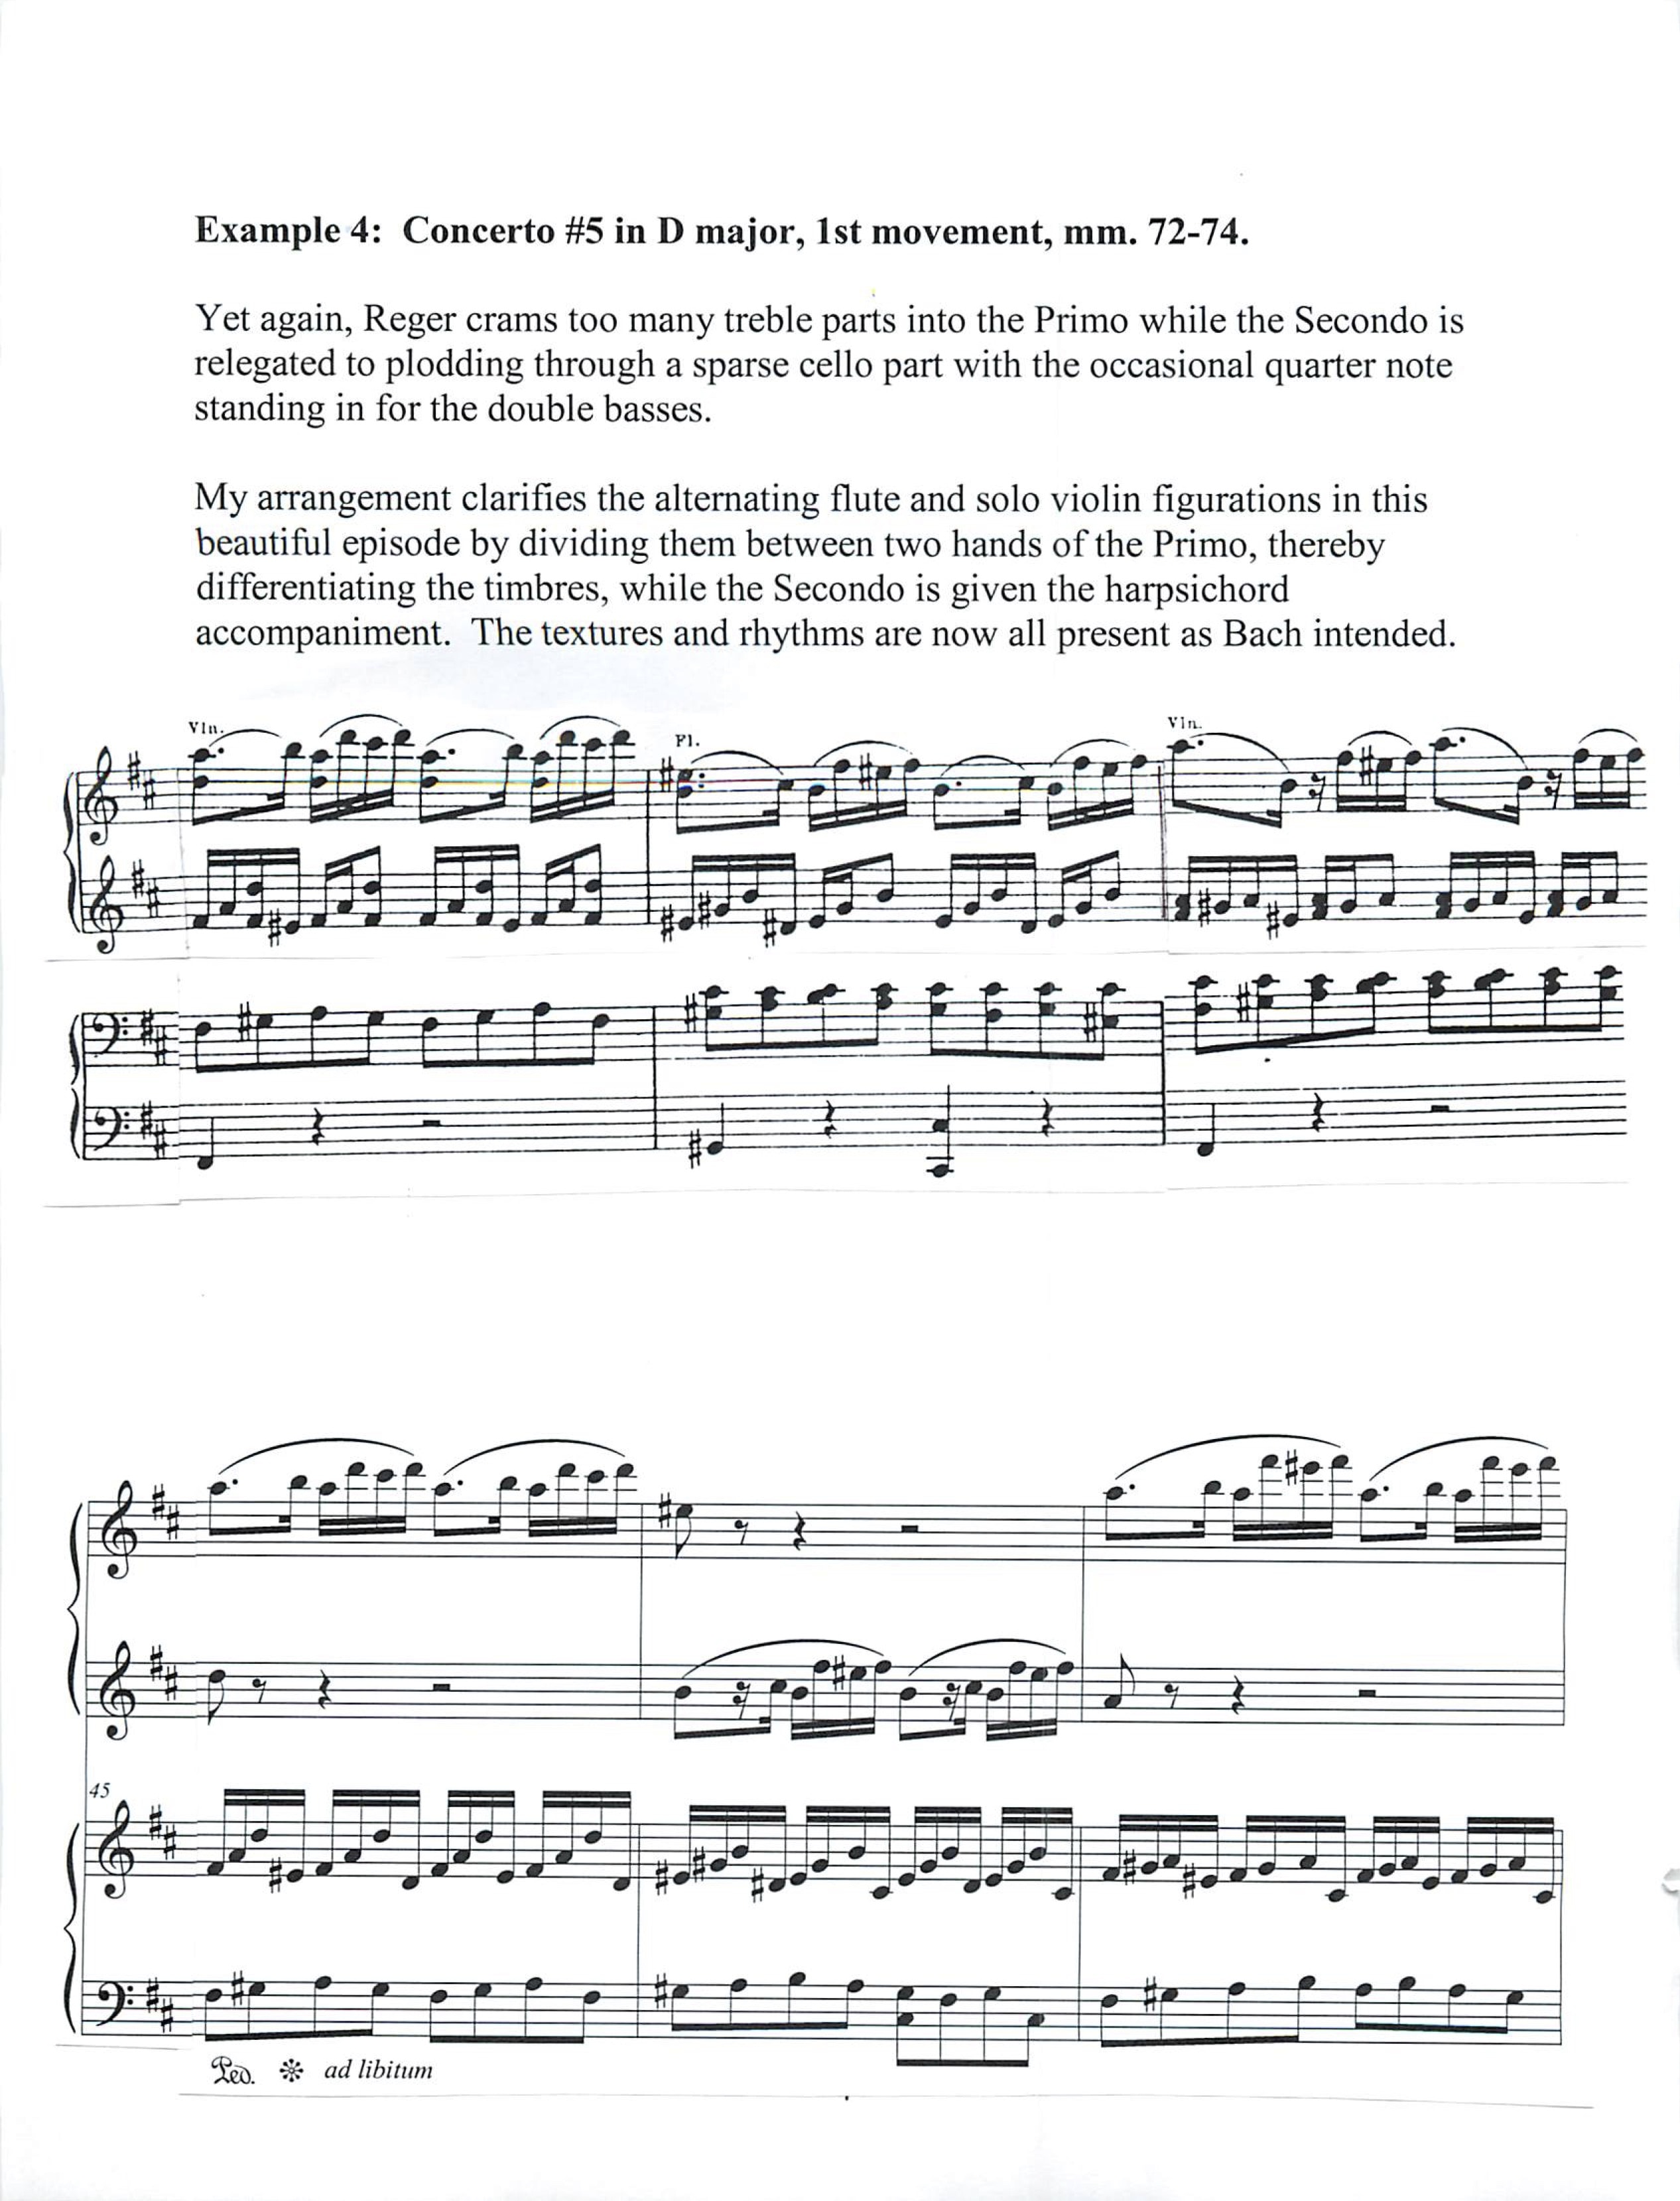 Concert #5 in D major, 1st movement, mm. 72-74